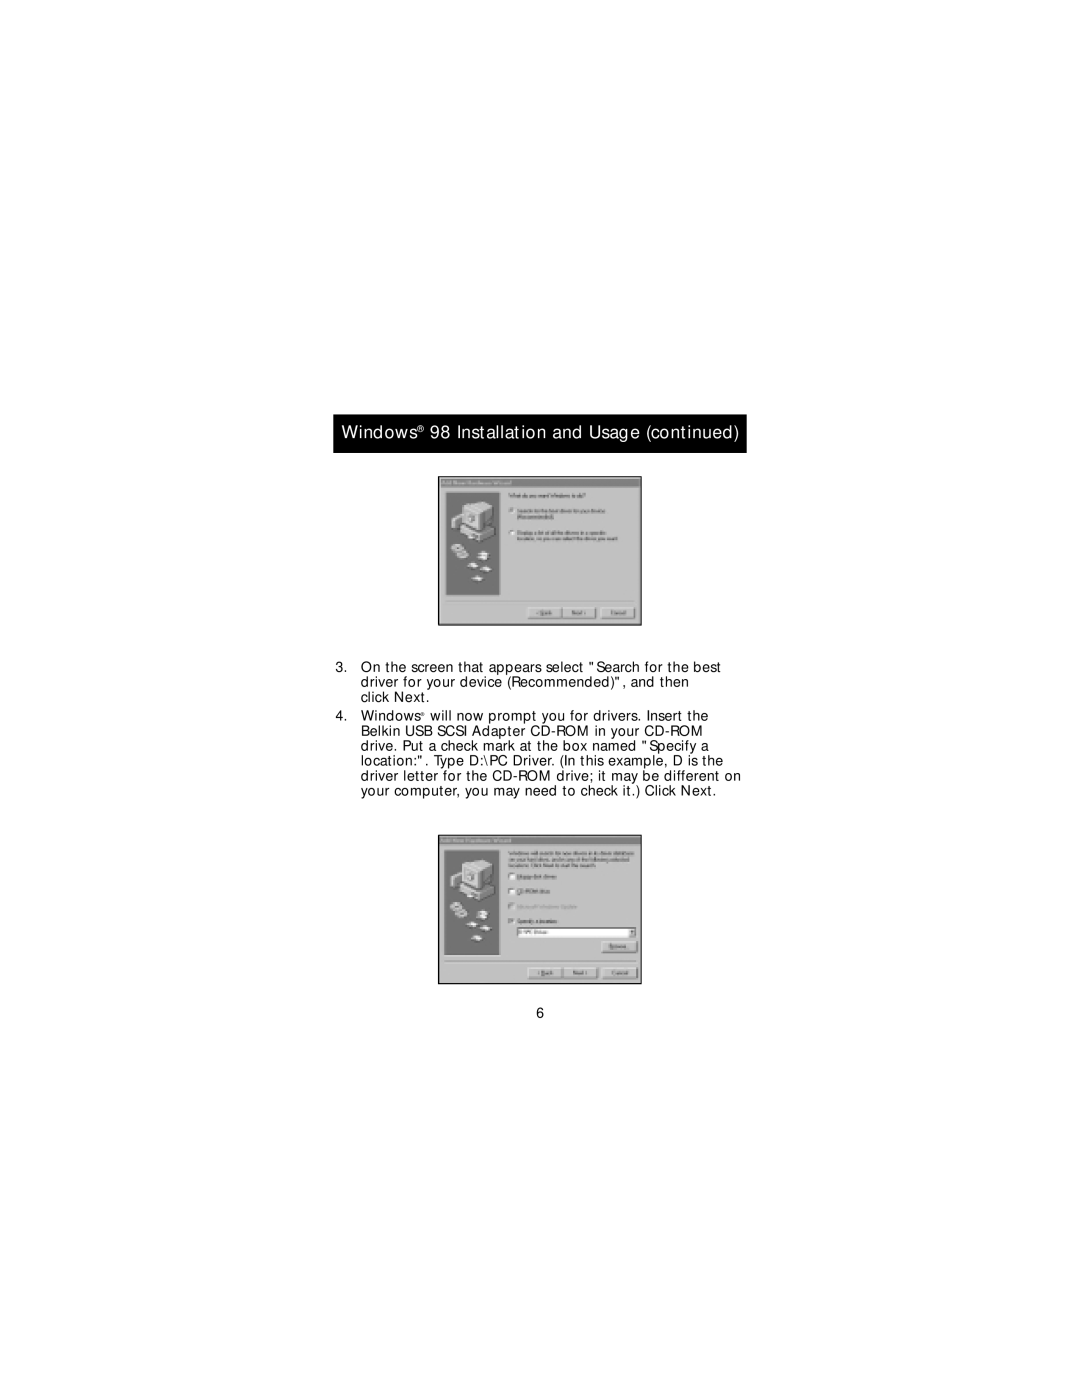 Belkin F5U015-TPW manual Windows 98 Installation and Usage continued 